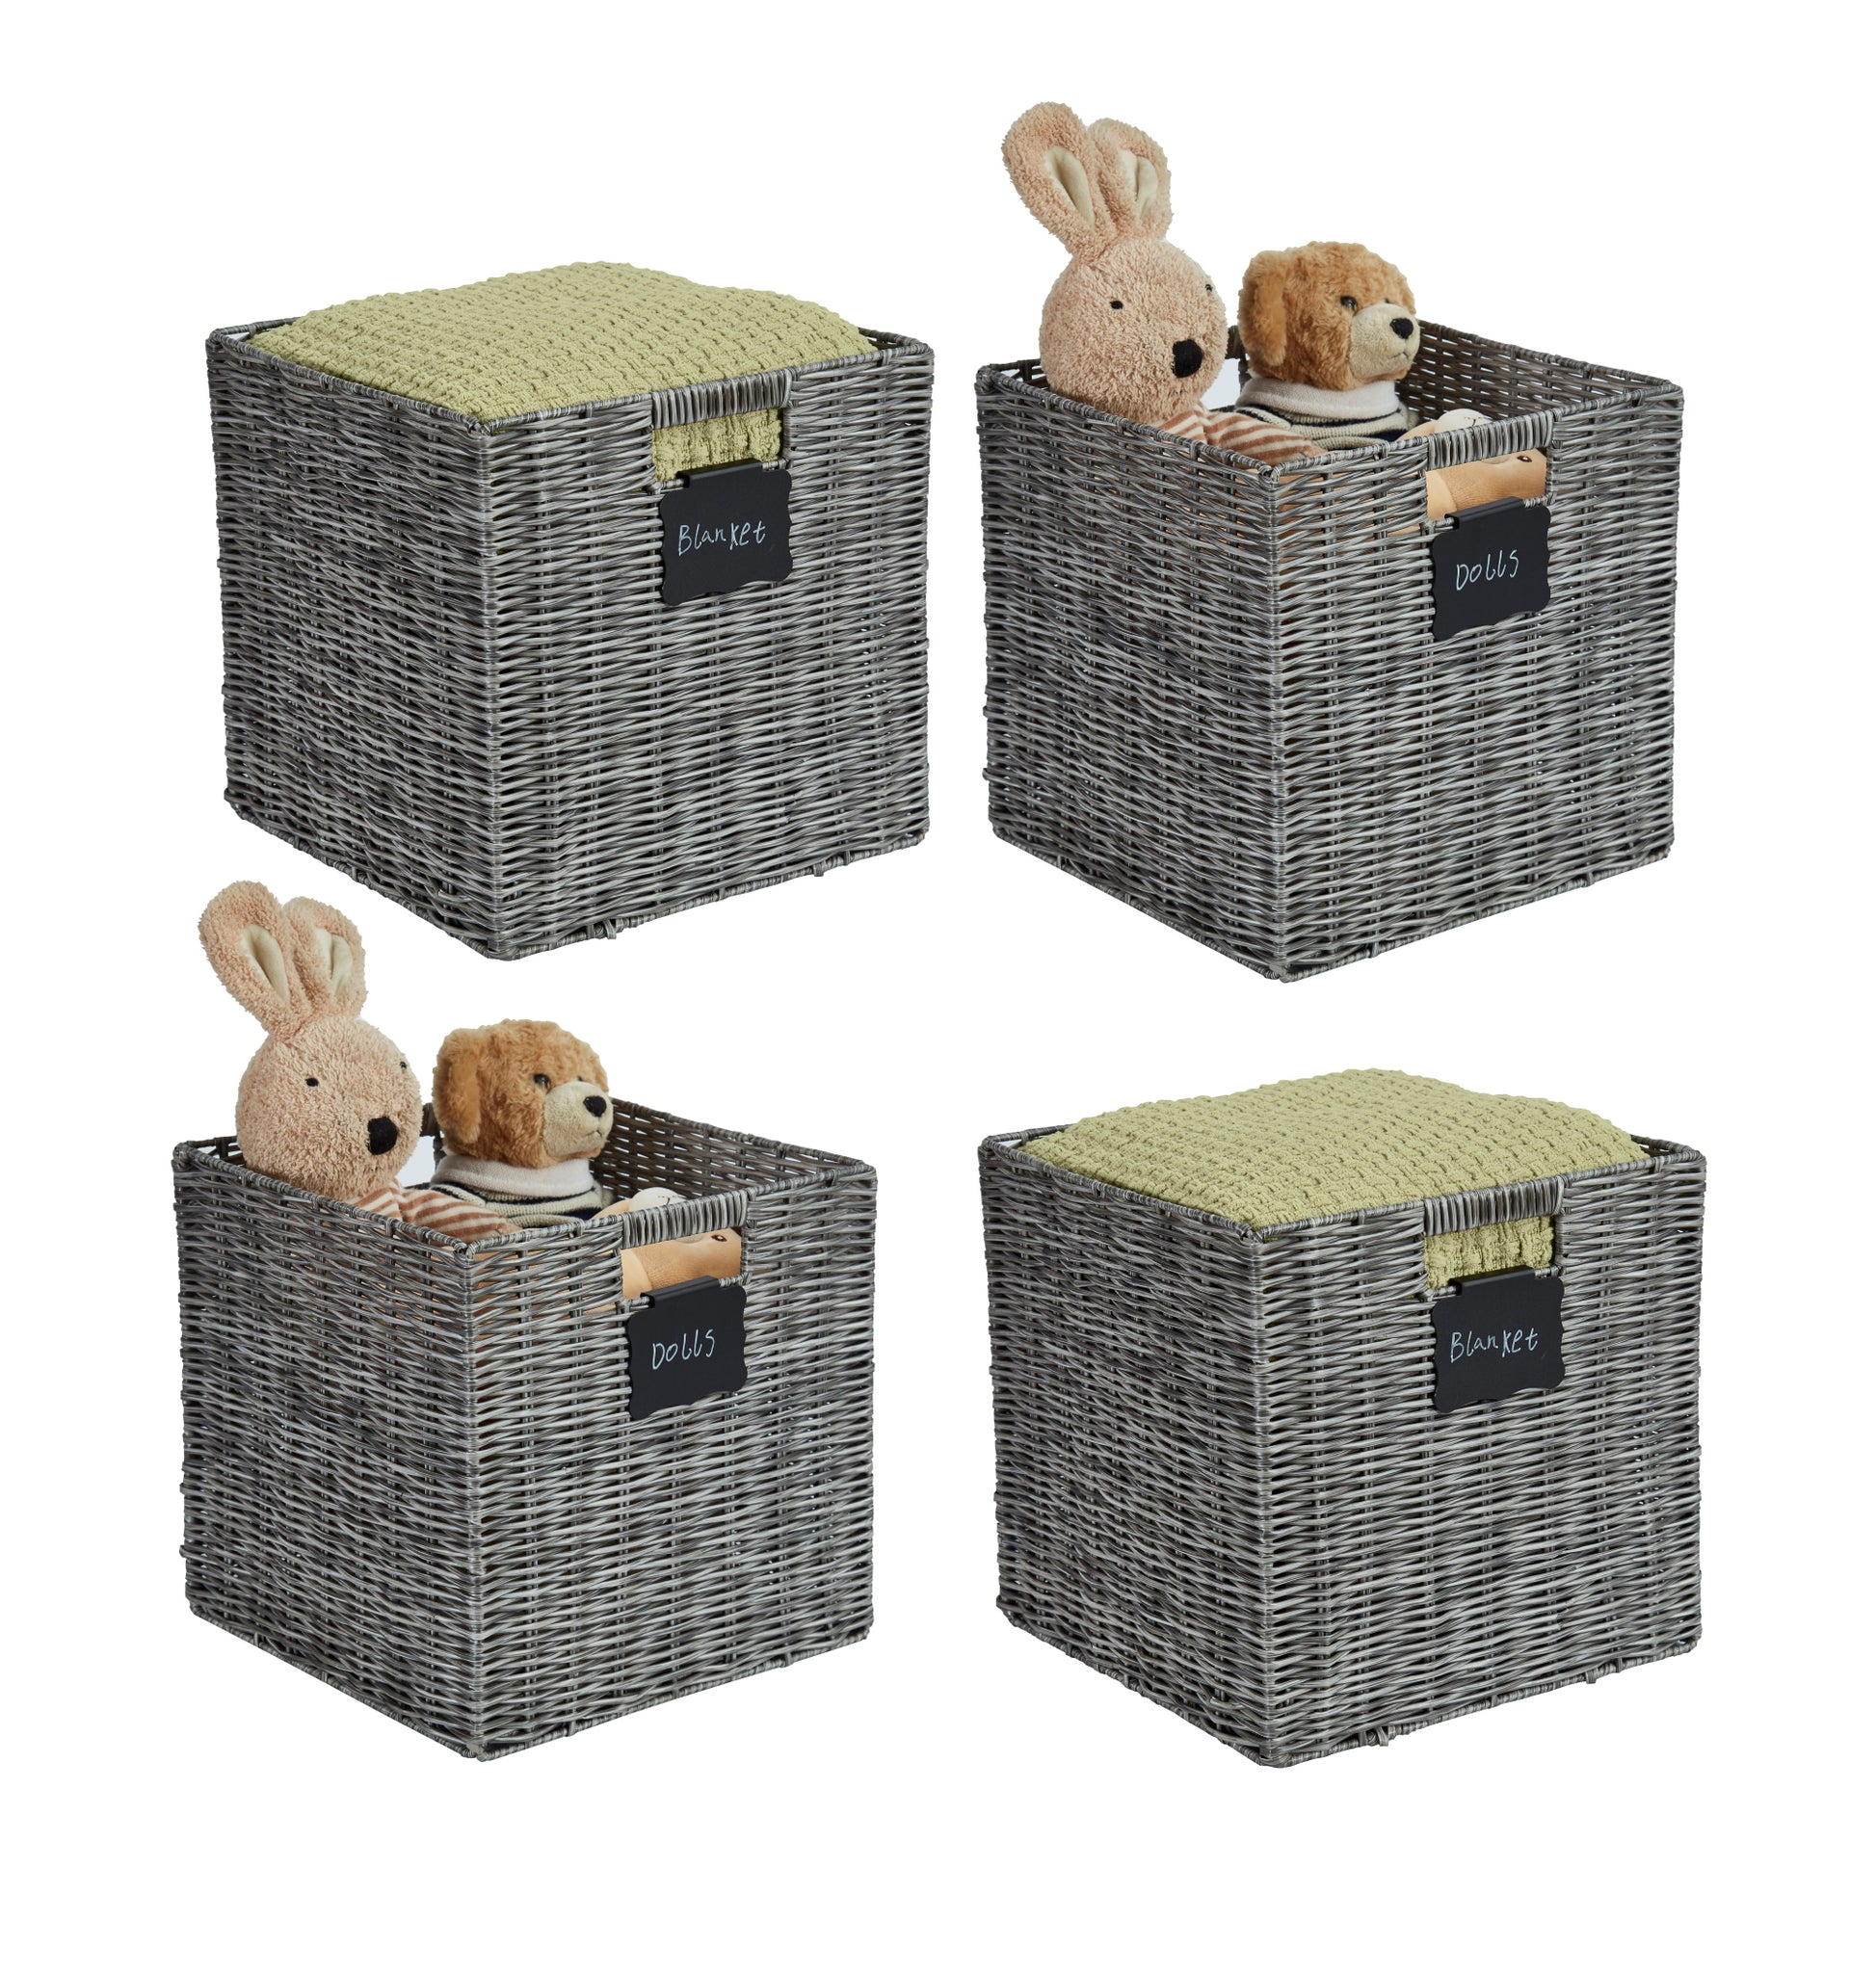 12x12 Cube Storage Bins, Storage Bins for Cube Organizer for Closet,  Storage Cubes for Organizing Clothes Toys Books, Fabric Cube Storage Bins  with